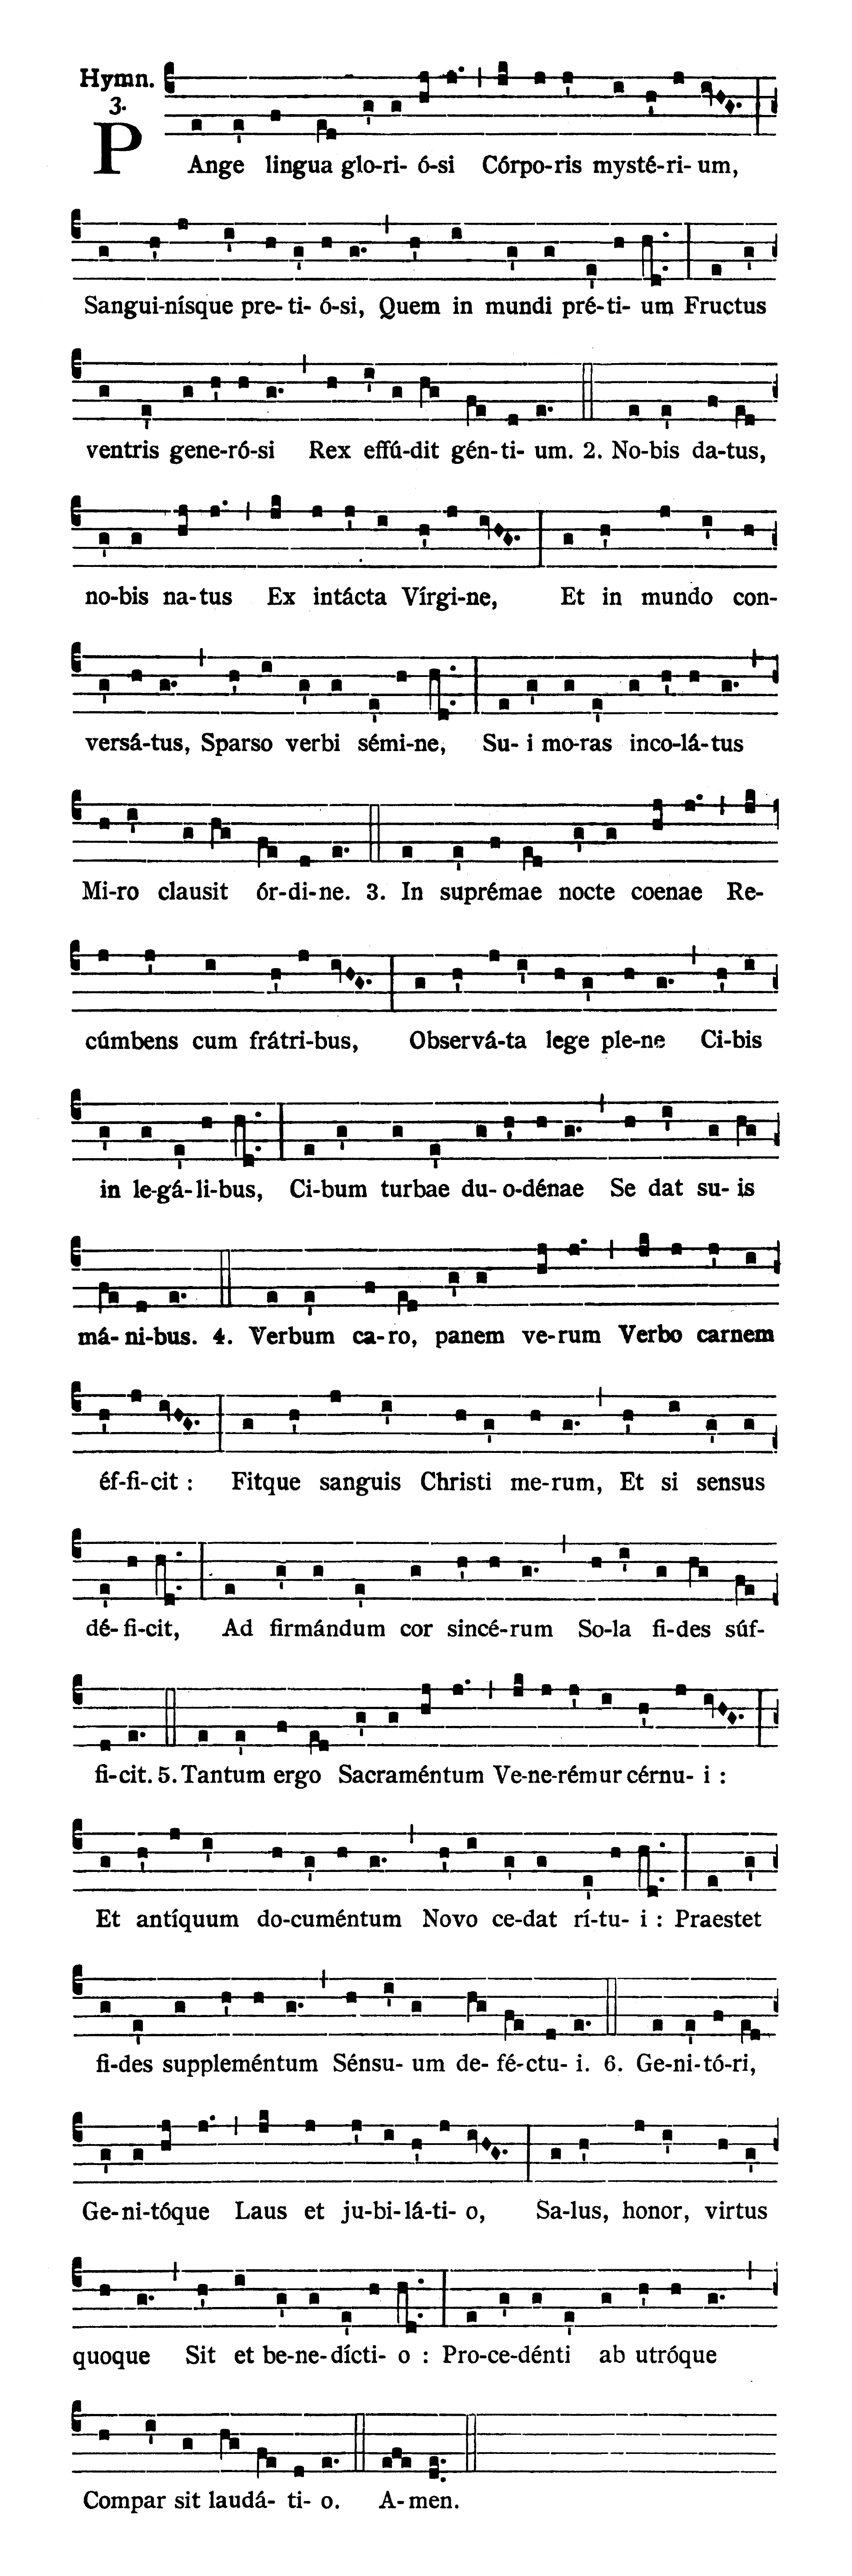 Feria V in Cena Domini - Ad translationem SS-mi Sacramenti - Hymnus (Pange lingua gloriosi)